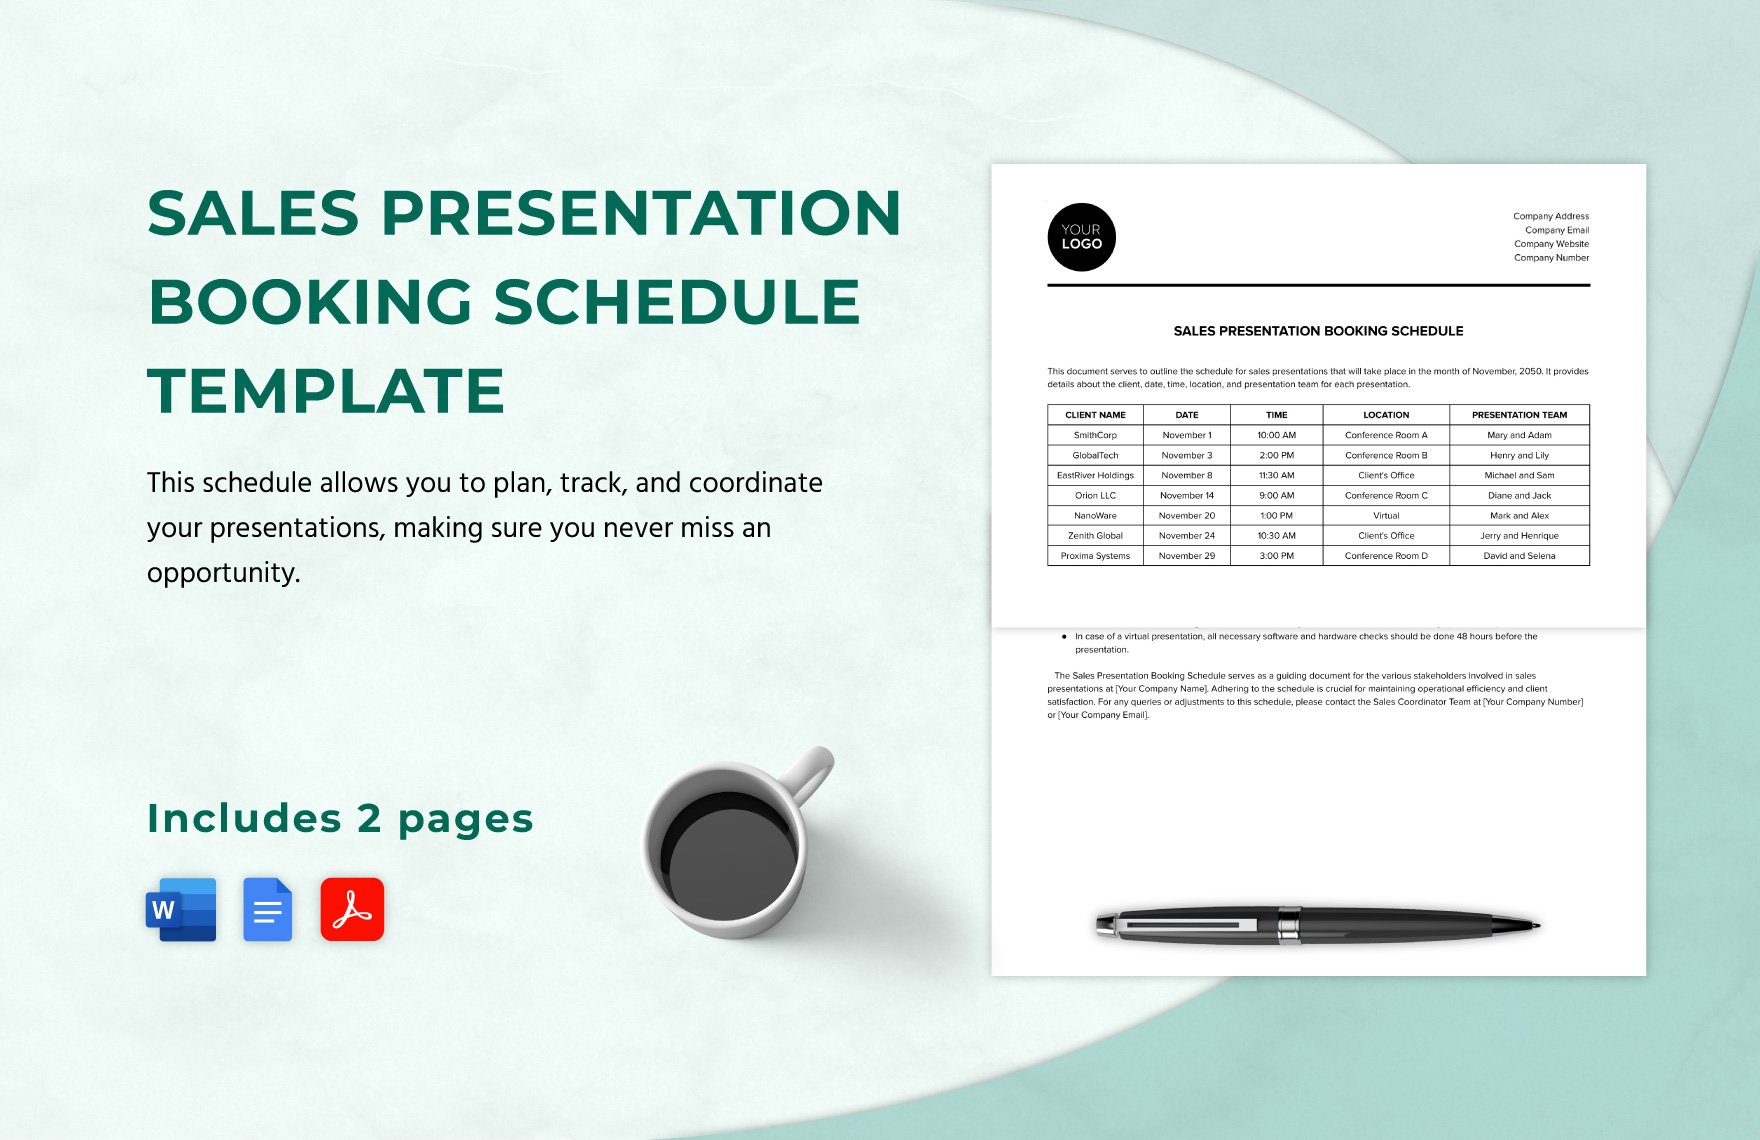 Sales Presentation Booking Schedule Template in Word, Google Docs, PDF